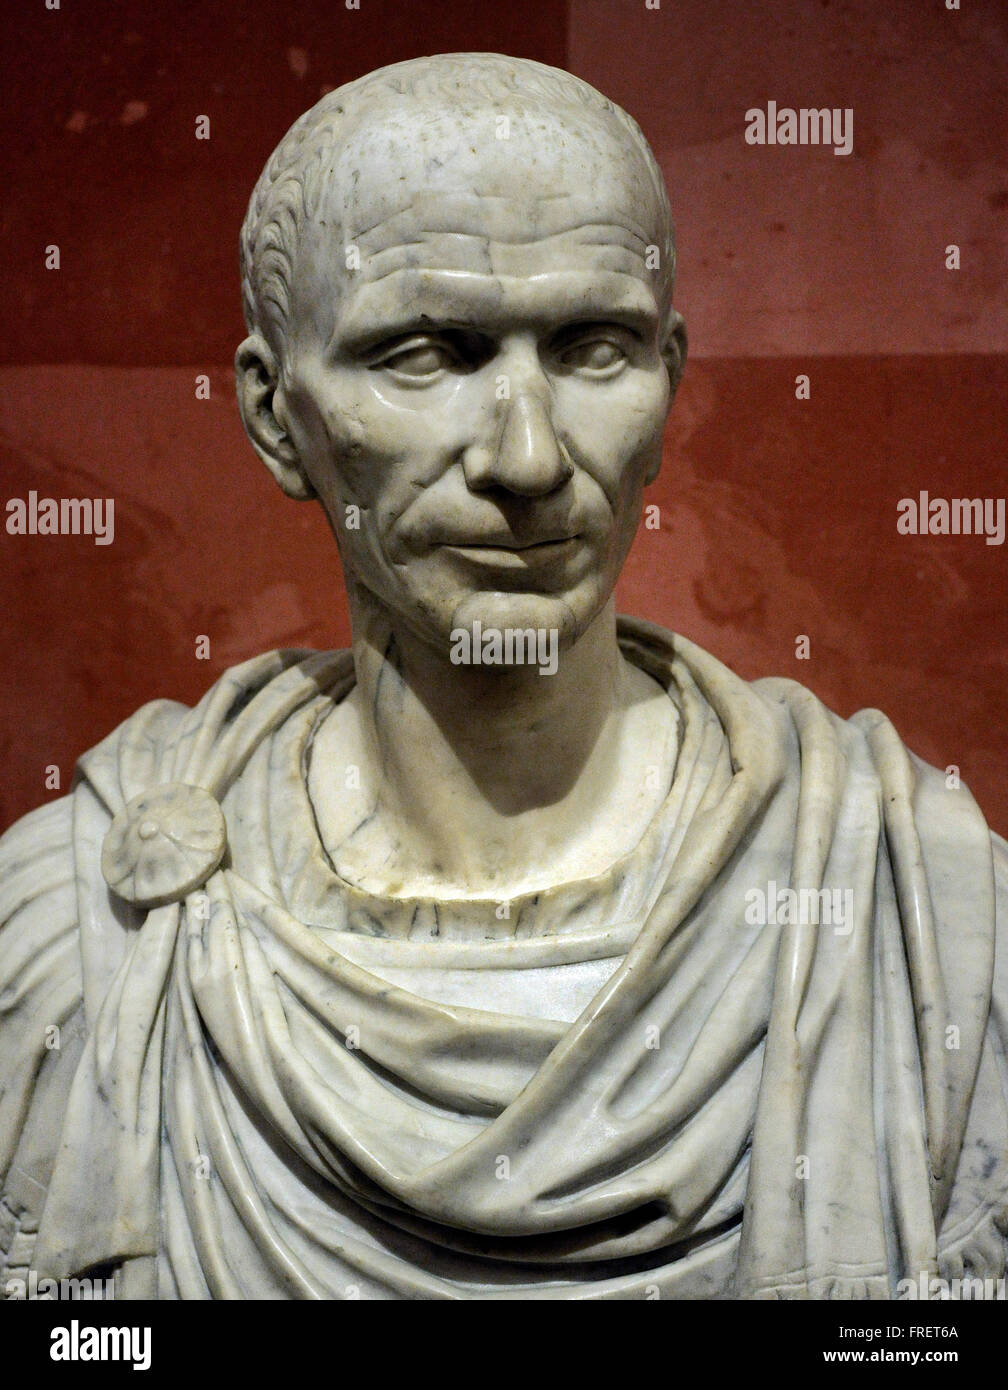 Julius Caesar Dictator Roman High Resolution Stock Photography and ...